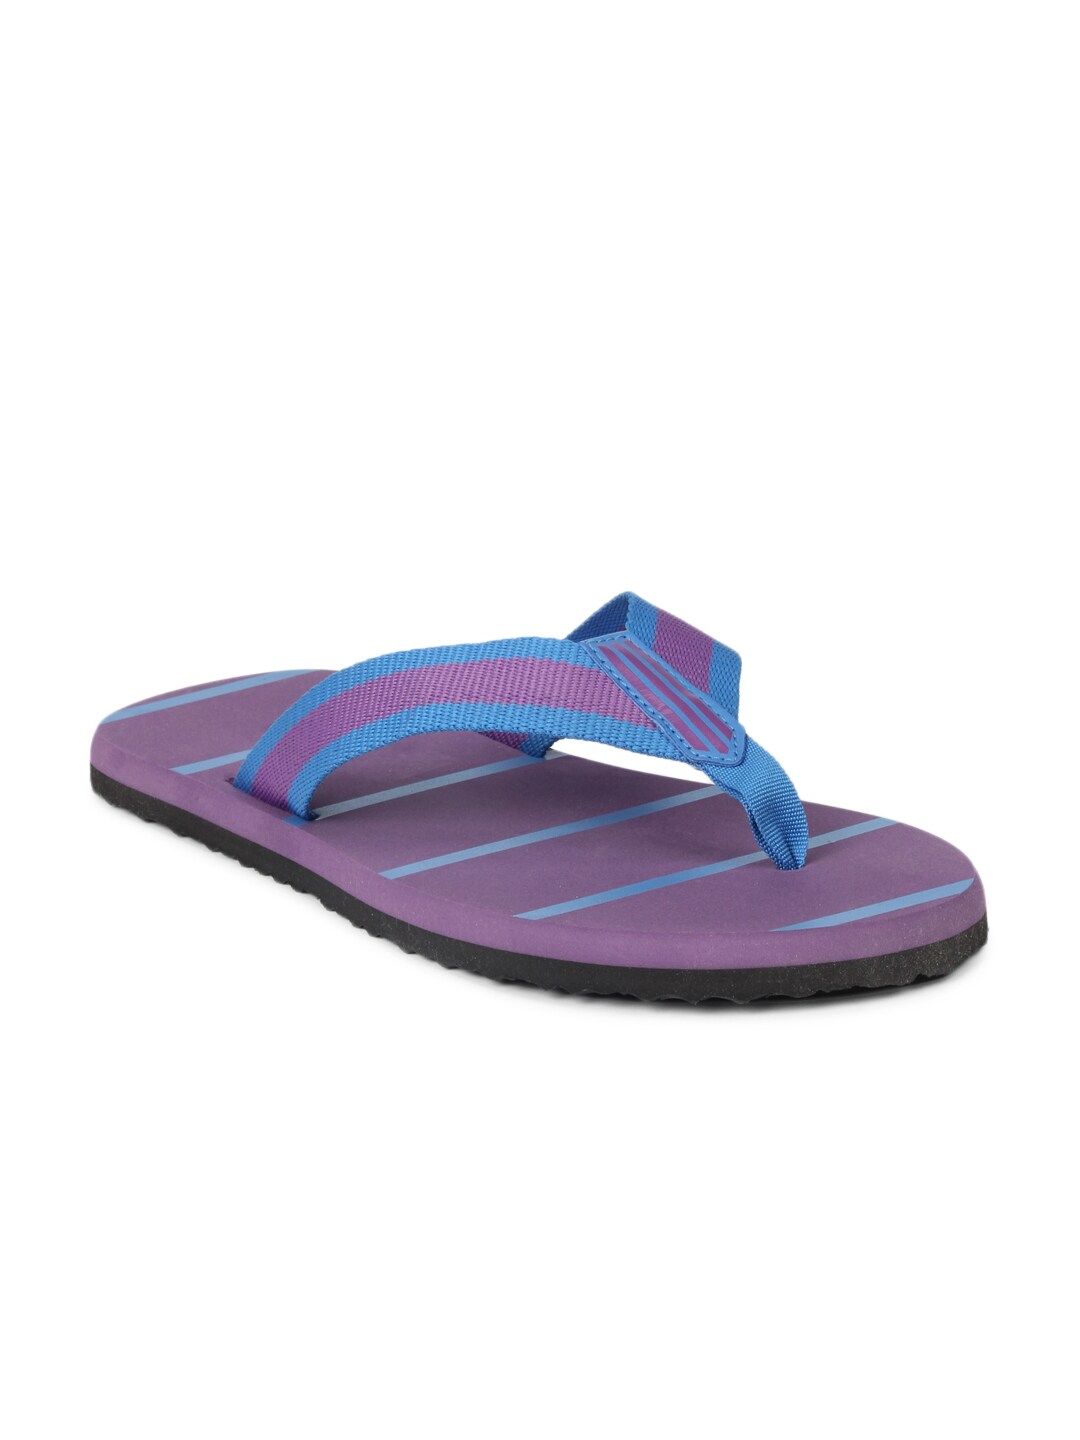 ADIDAS Men Purple Tread Flip Flops